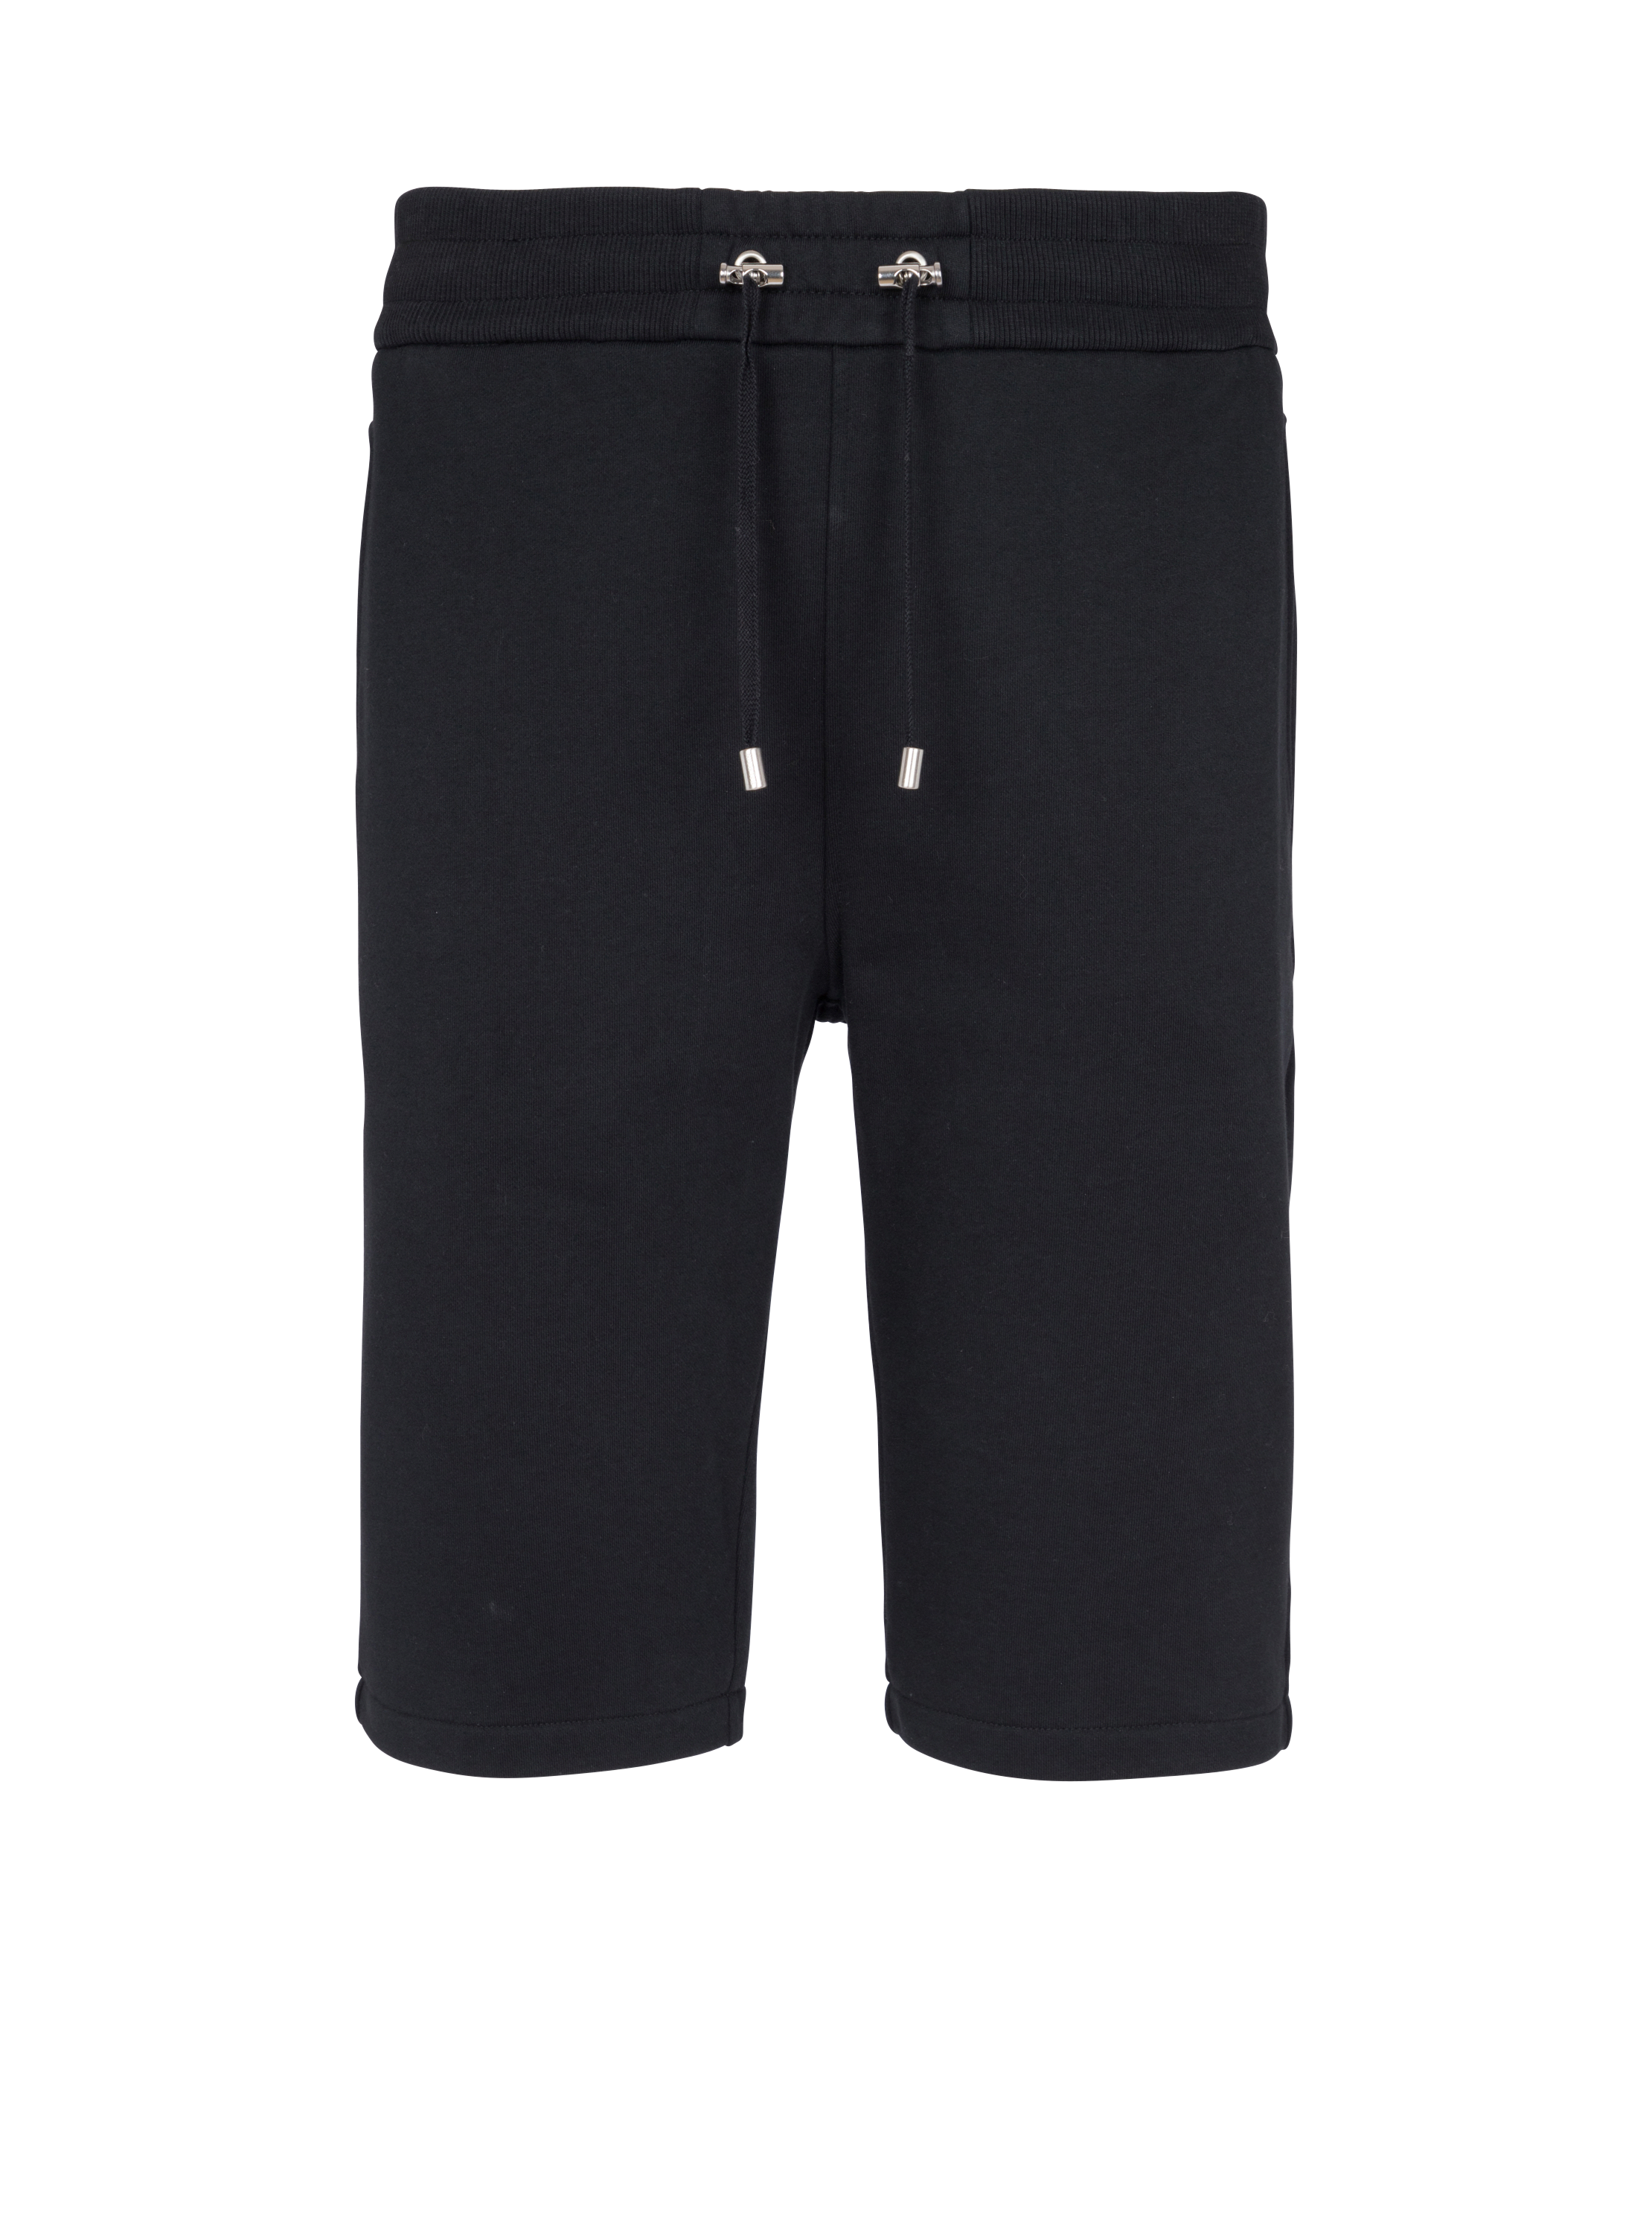 Shorts aus Baumwolle mit geflocktem „Balmain Paris“-Logo, schwarz, hi-res